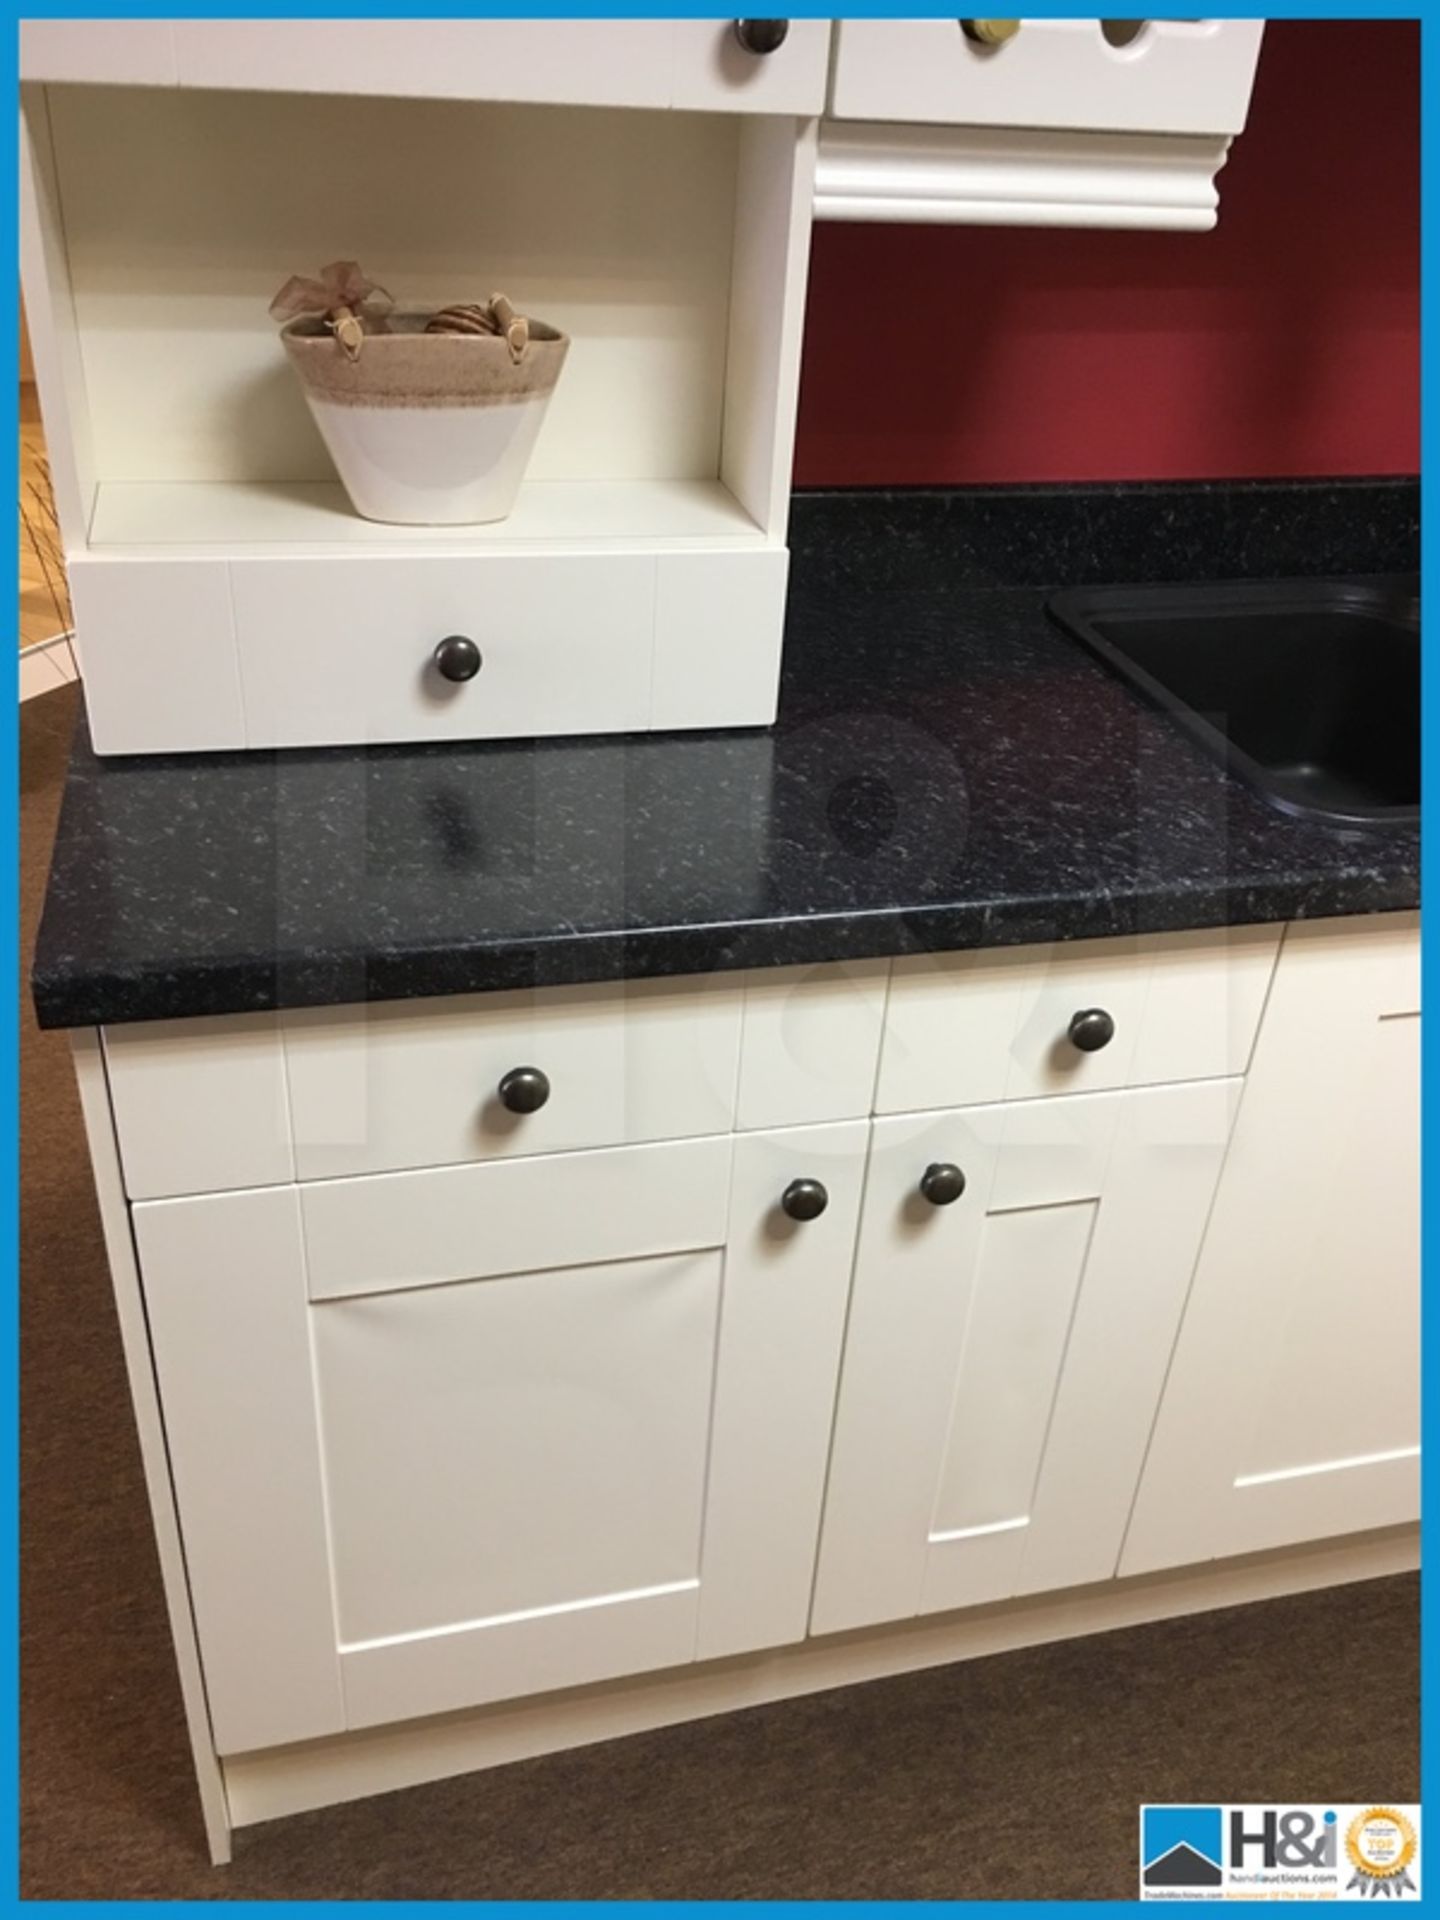 Beautiful white display kitchen compete with dark marble effect worktop, matching dark 1.5 bowl - Image 6 of 15